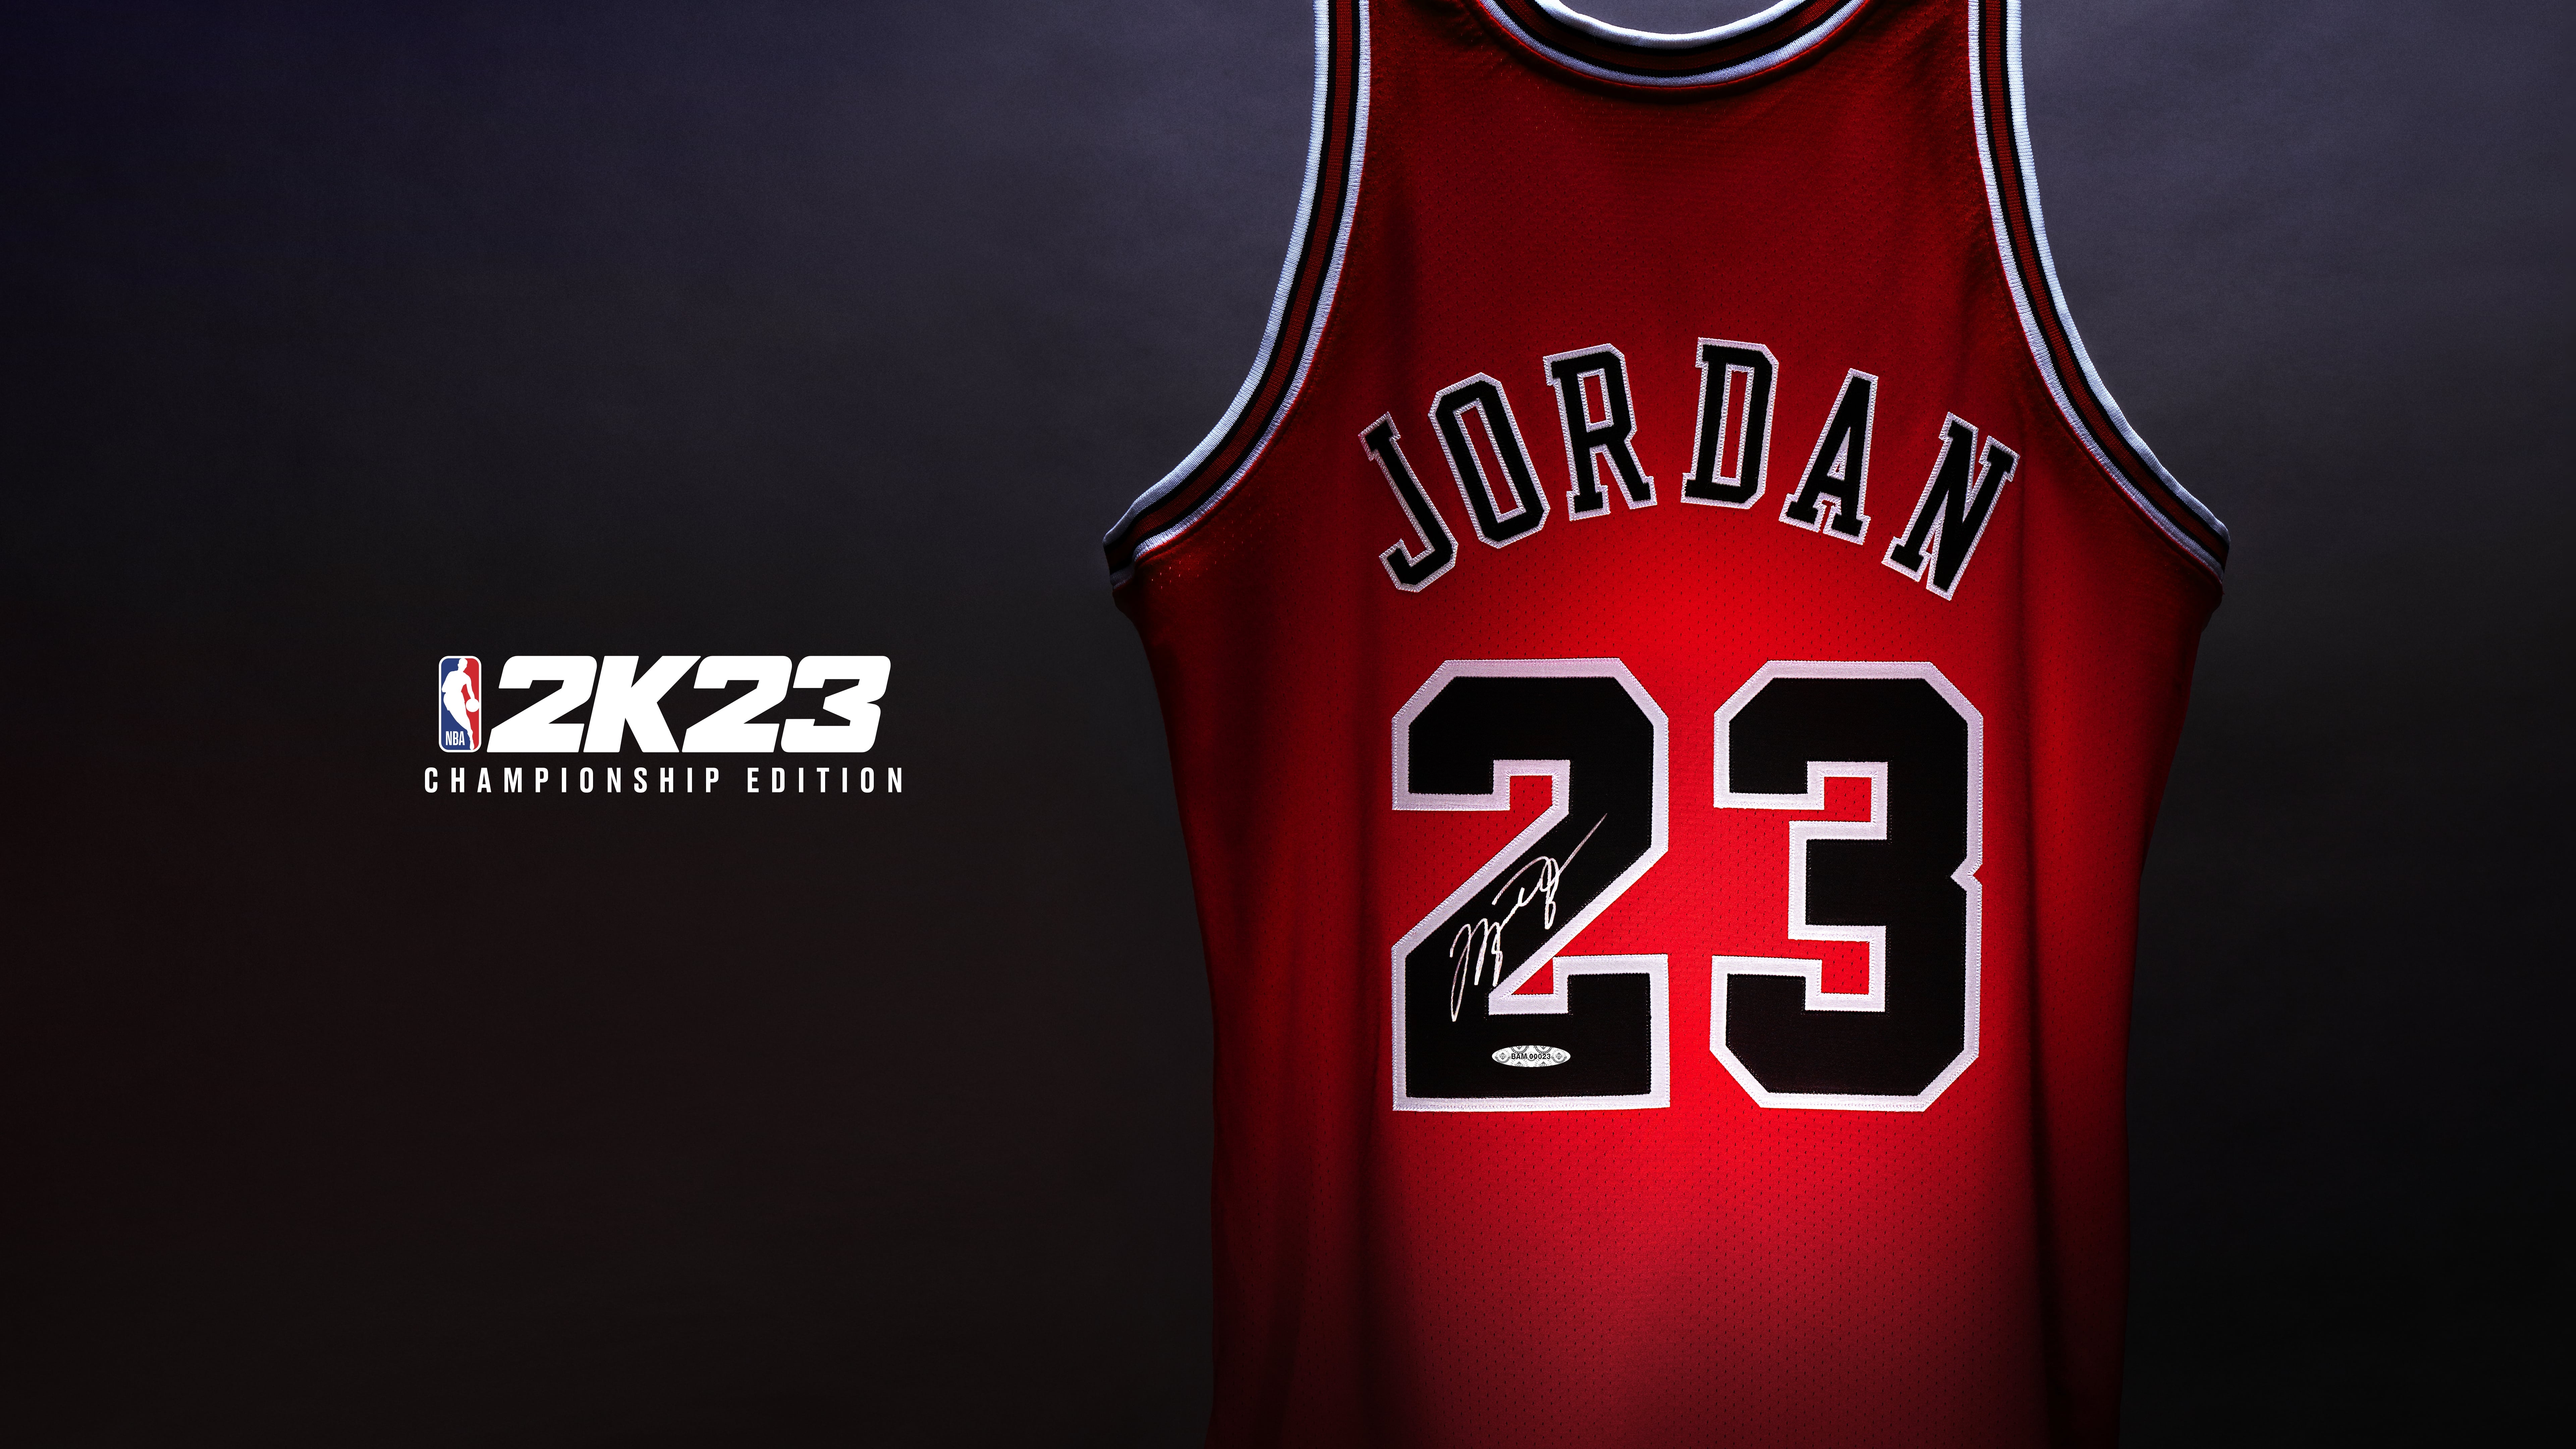 HD wallpaper, Jersey, 5K, Jordan, Championship Edition, Michael Jordan, 8K, Nba 2K23